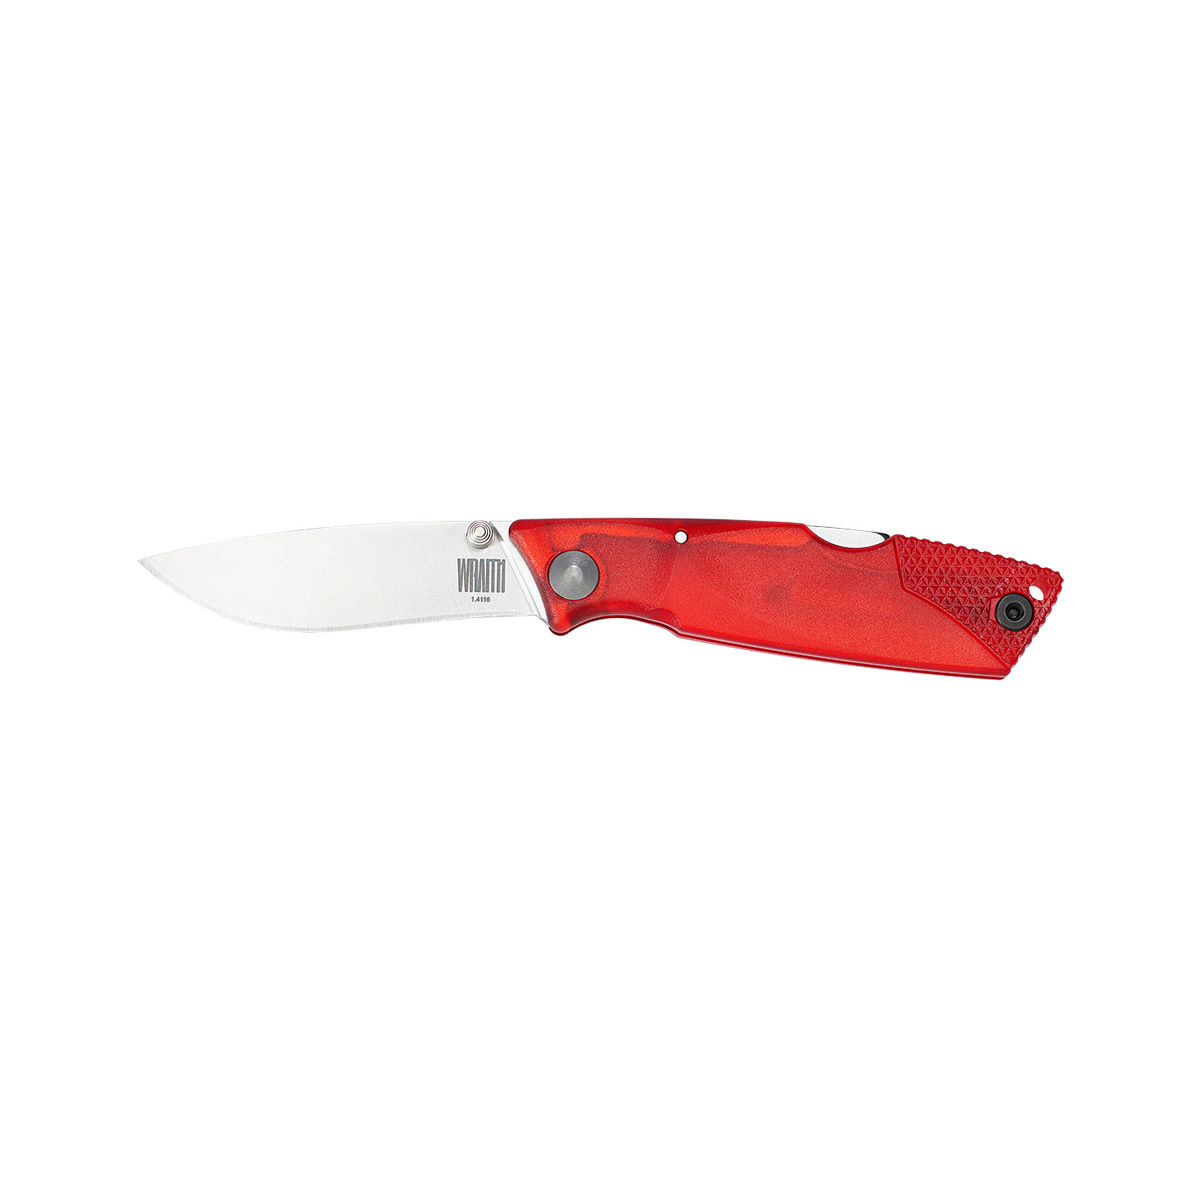 Складной нож Ontario Wraith Ice Series Fire, сталь 1.4116, рукоять пластик - фото 3